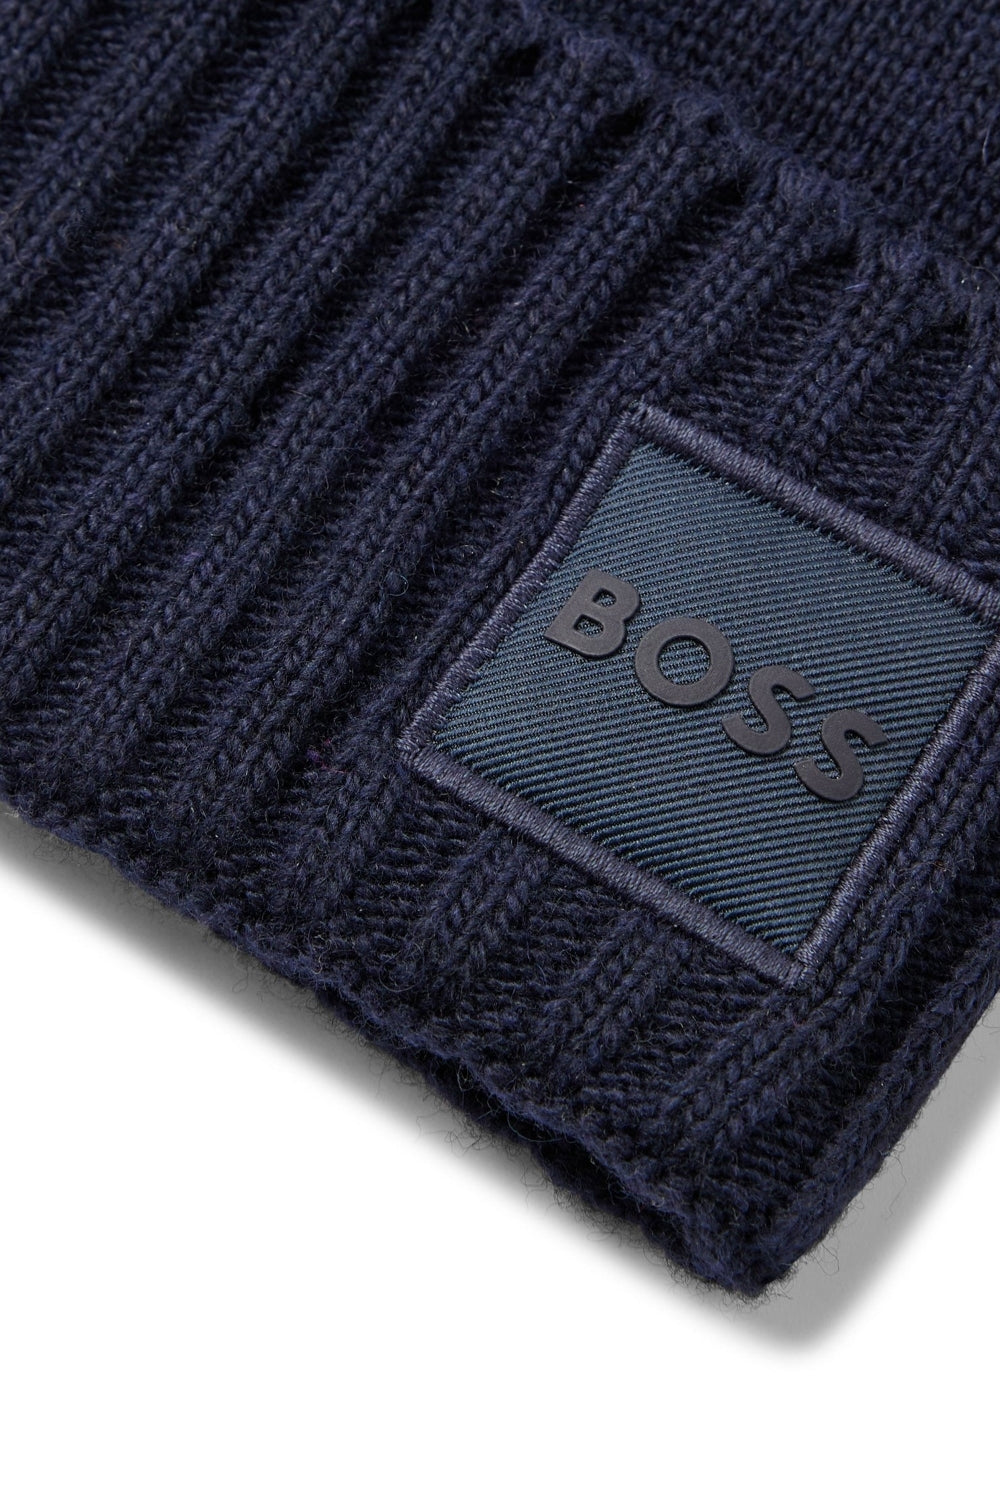 Hugo Boss Mens Wool Mix Beanie Cap 50476453